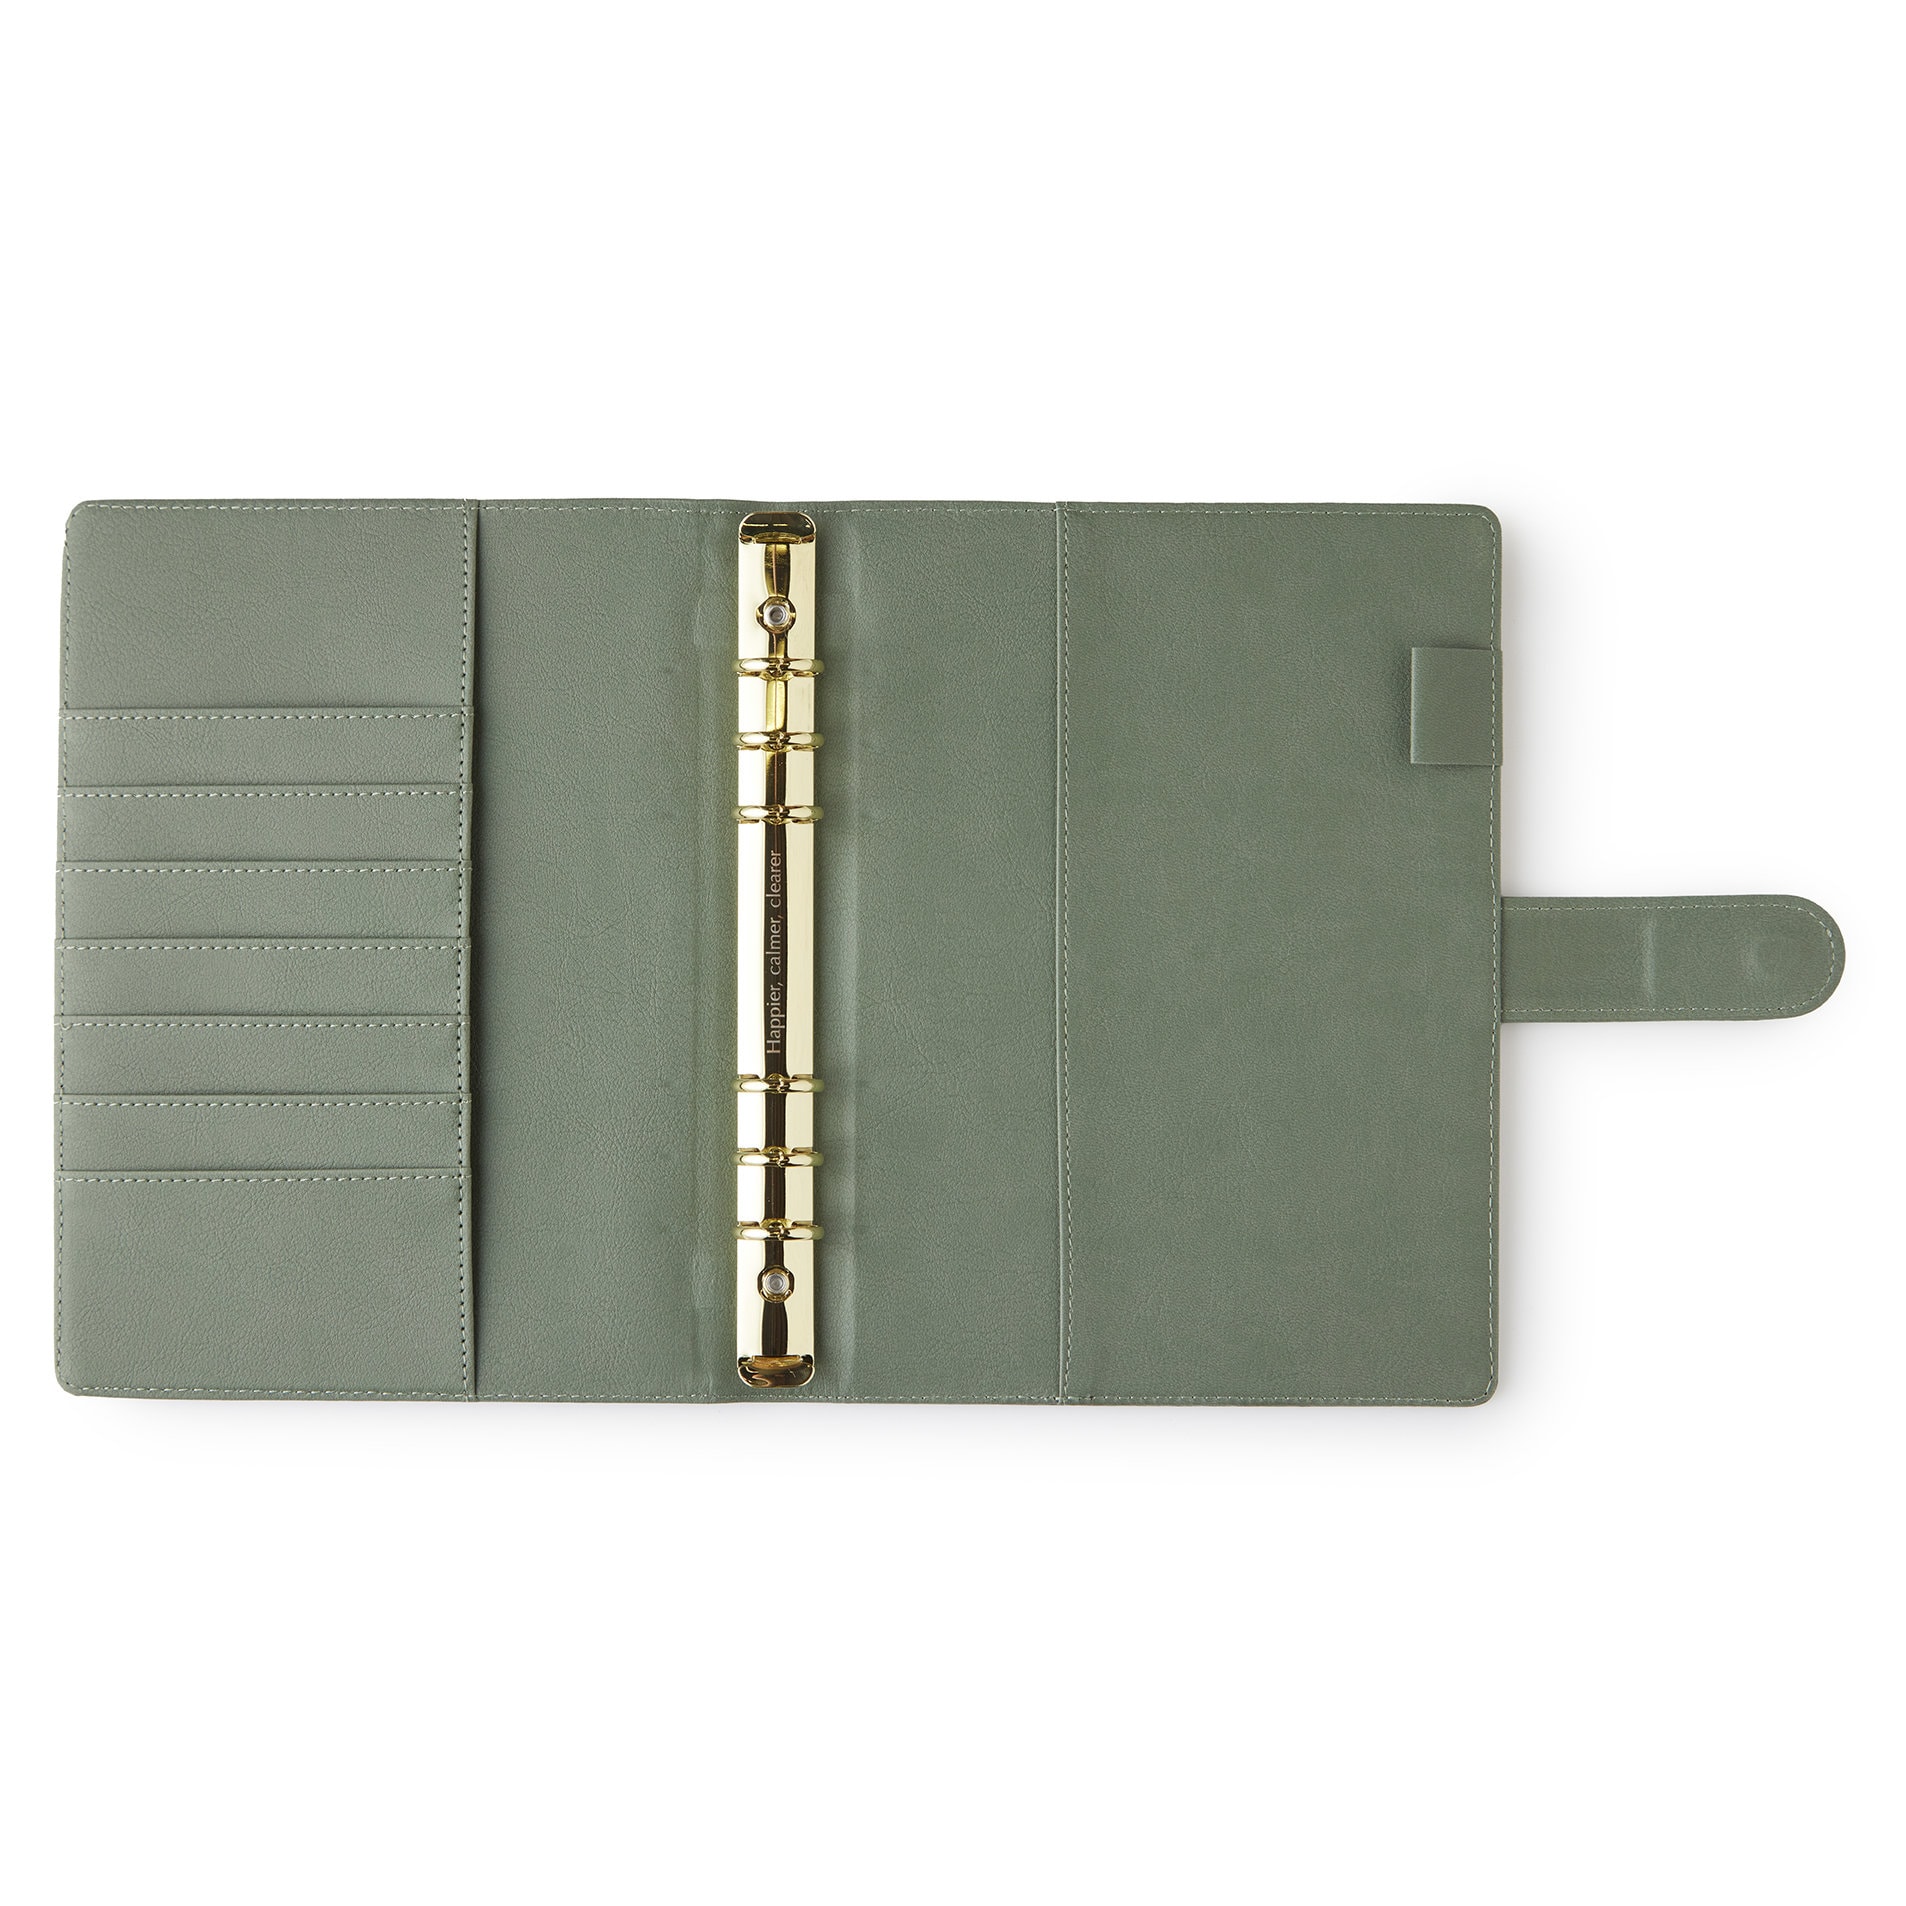 Filofax Pocket Planner Bridle (British Tan) Italian Leather 6-ring 4.5x5.5  NWOT